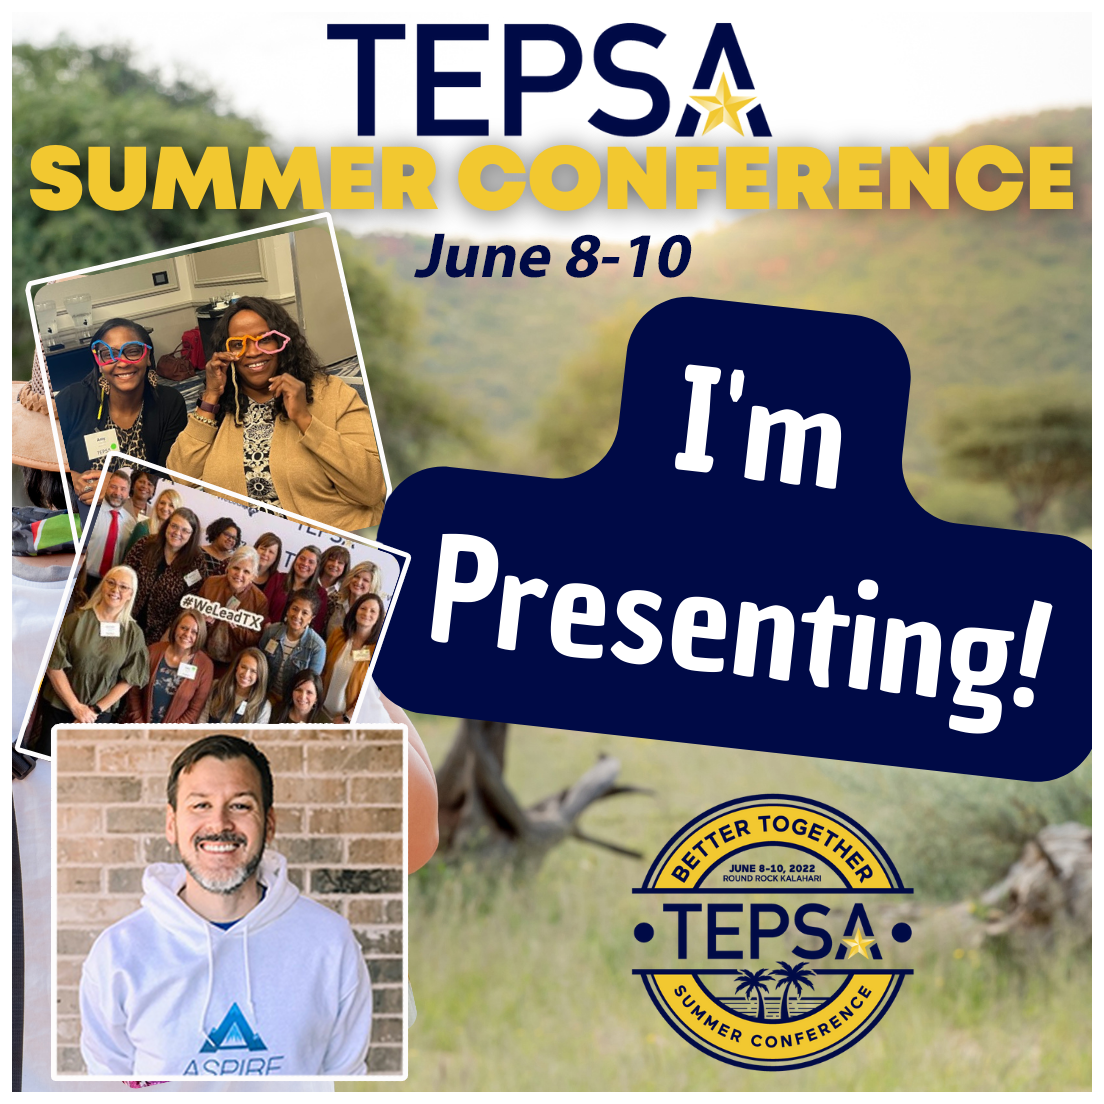 TEPSA, presenting Joshua Stamper, Aspire to Lead, #AspireLead